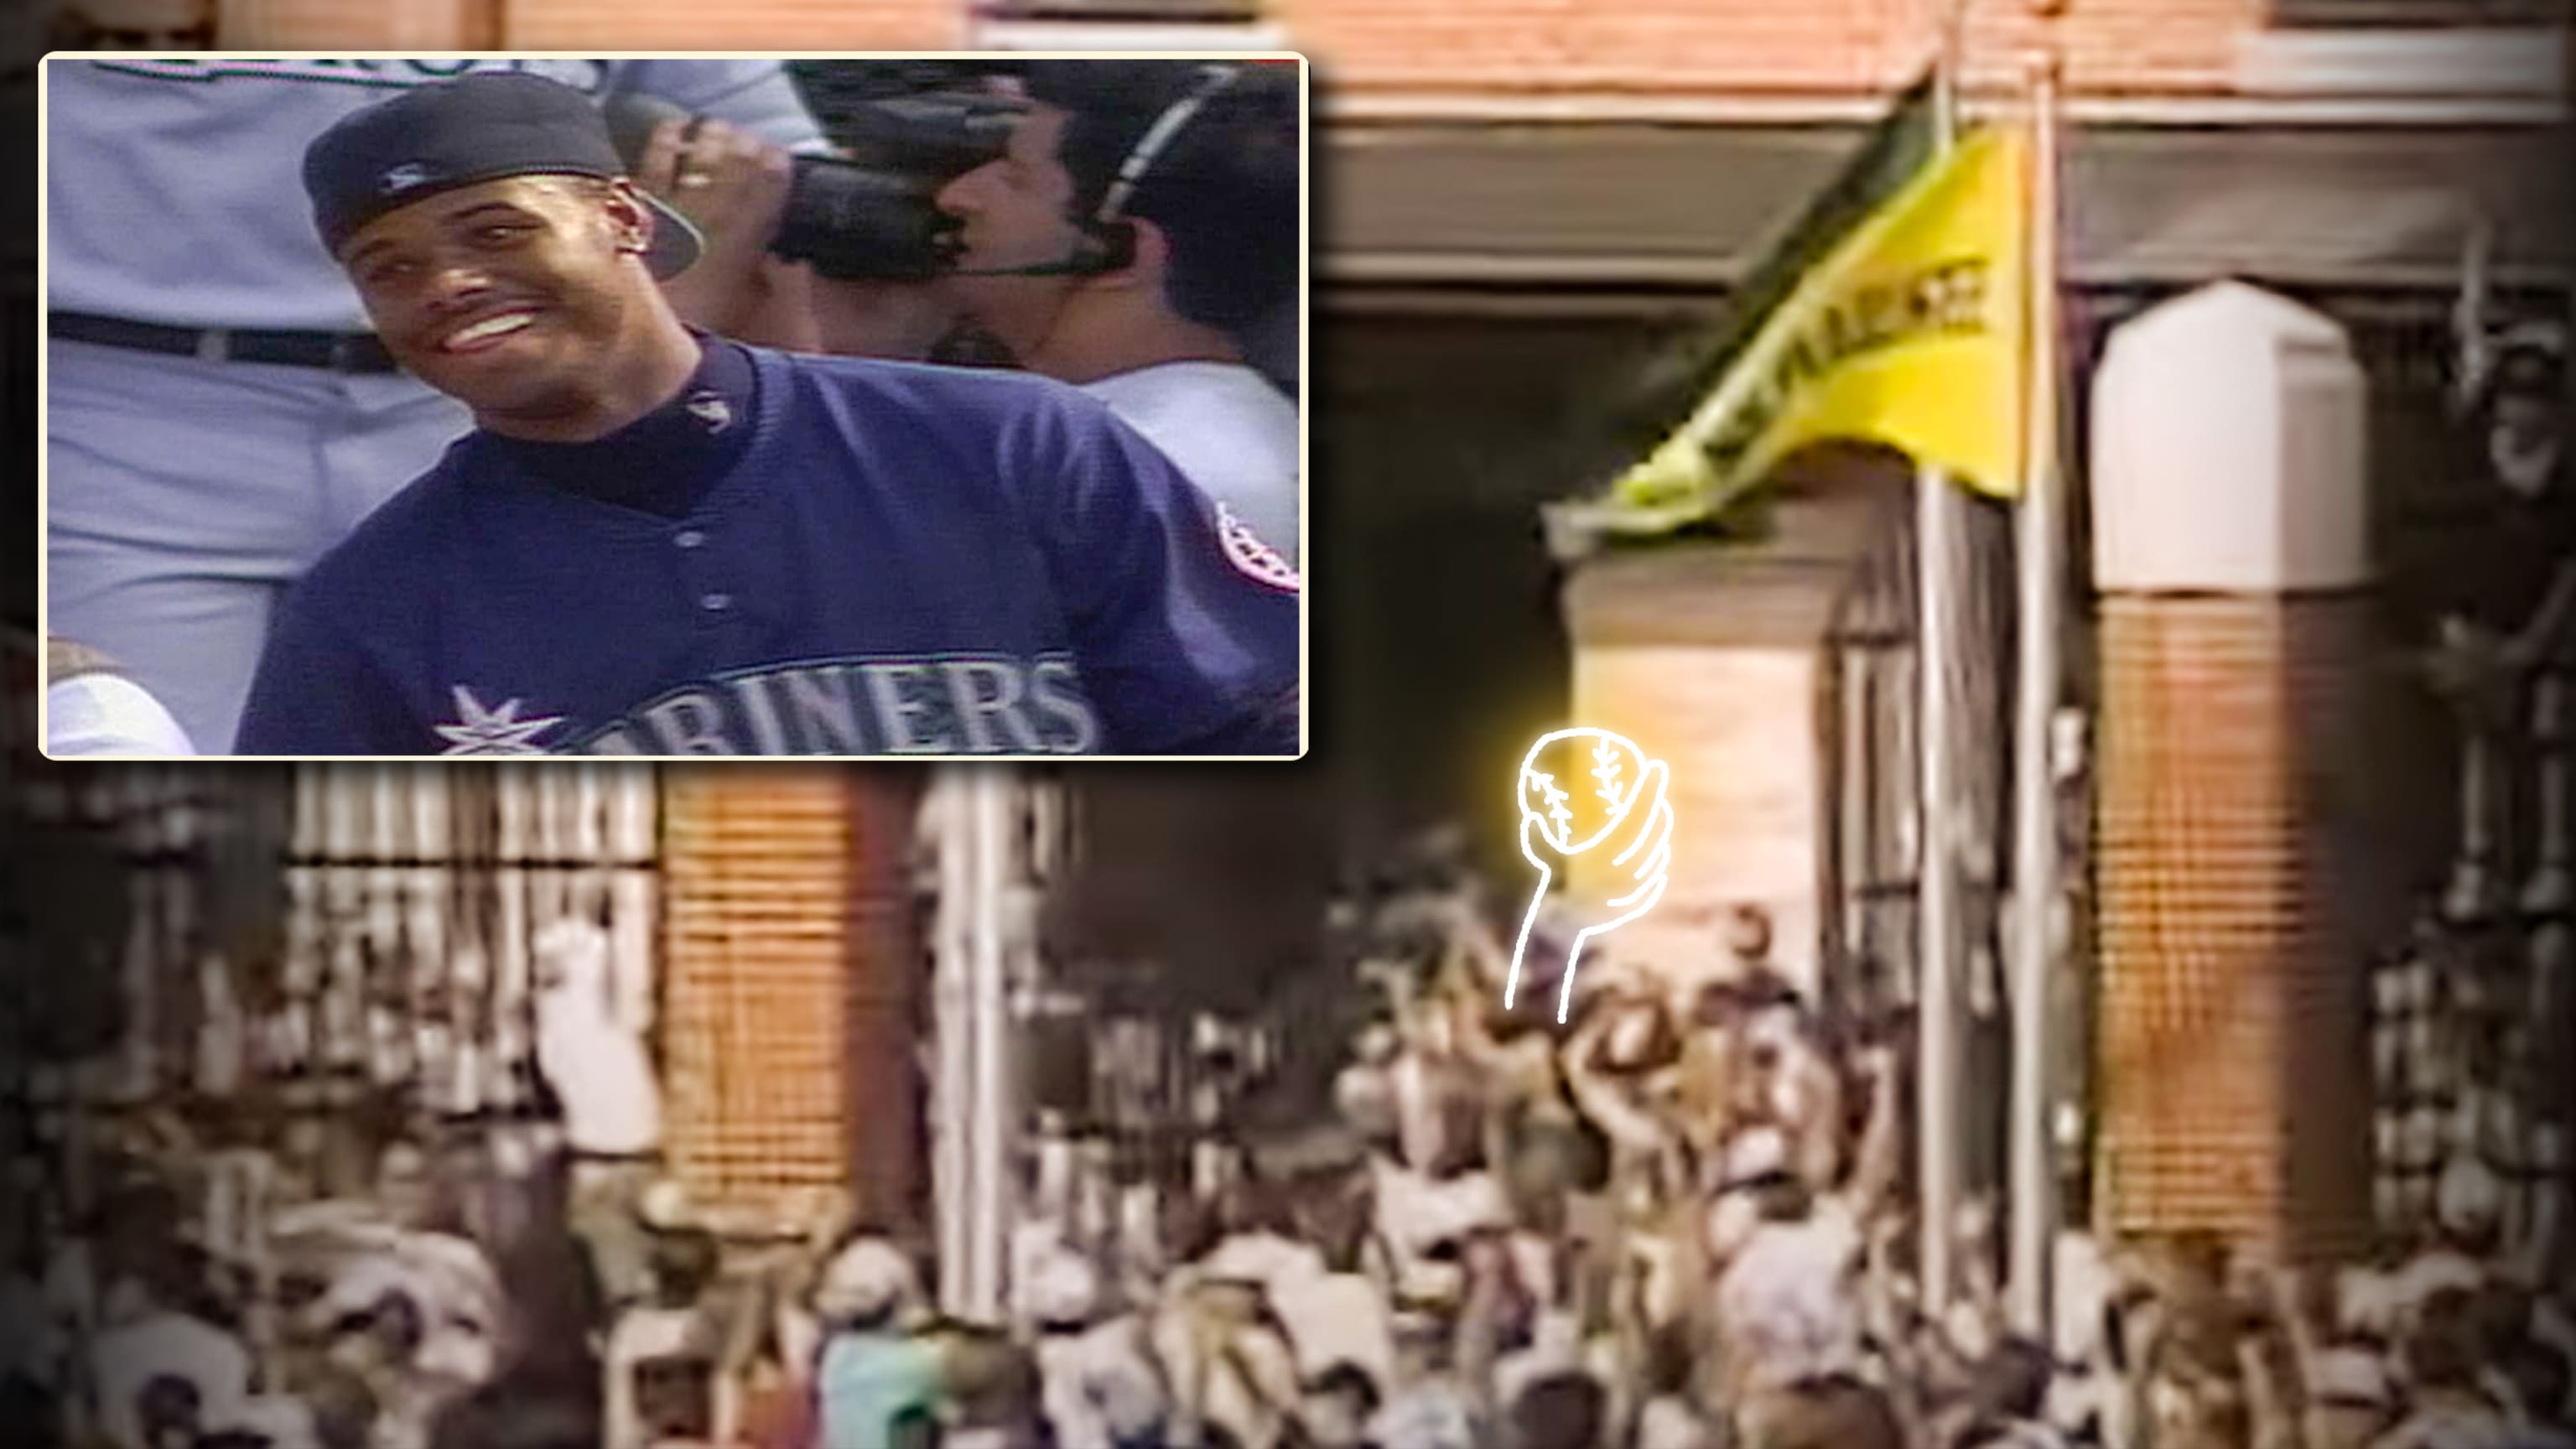 Warehouse shot in 1993 Home Run Derby helped fuel Ken Griffey Jr.'s legend